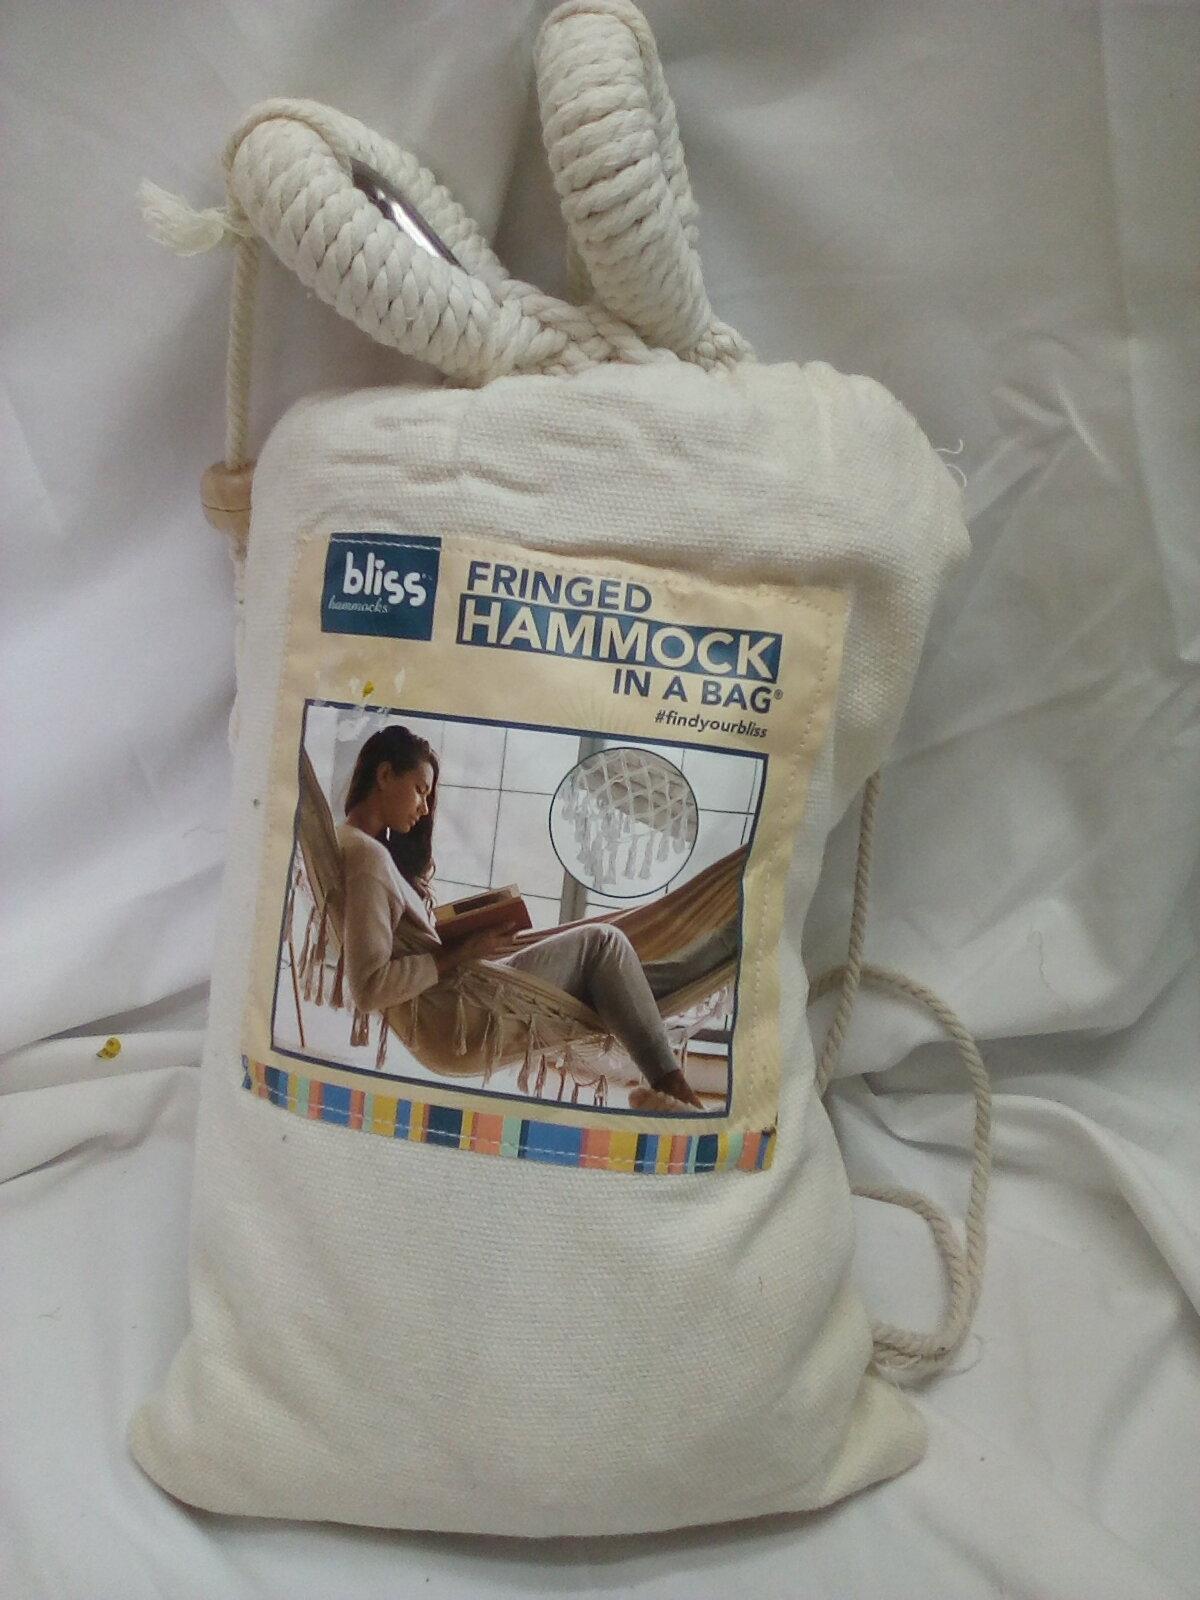 Bliss fringed hammock in a bag